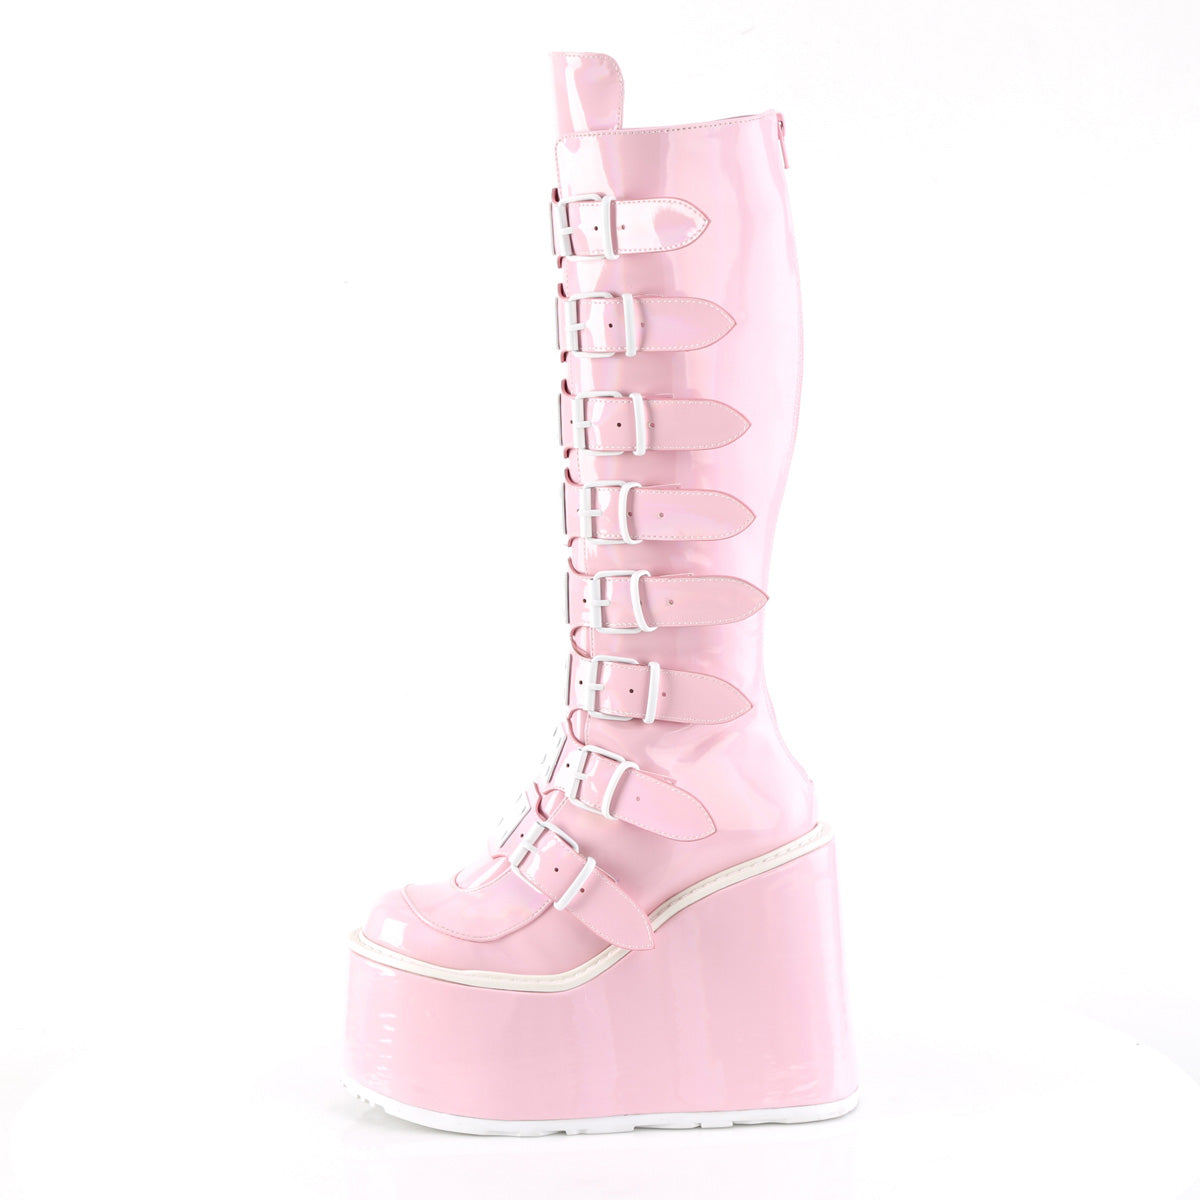 Cyberpunk pink boots swing-815